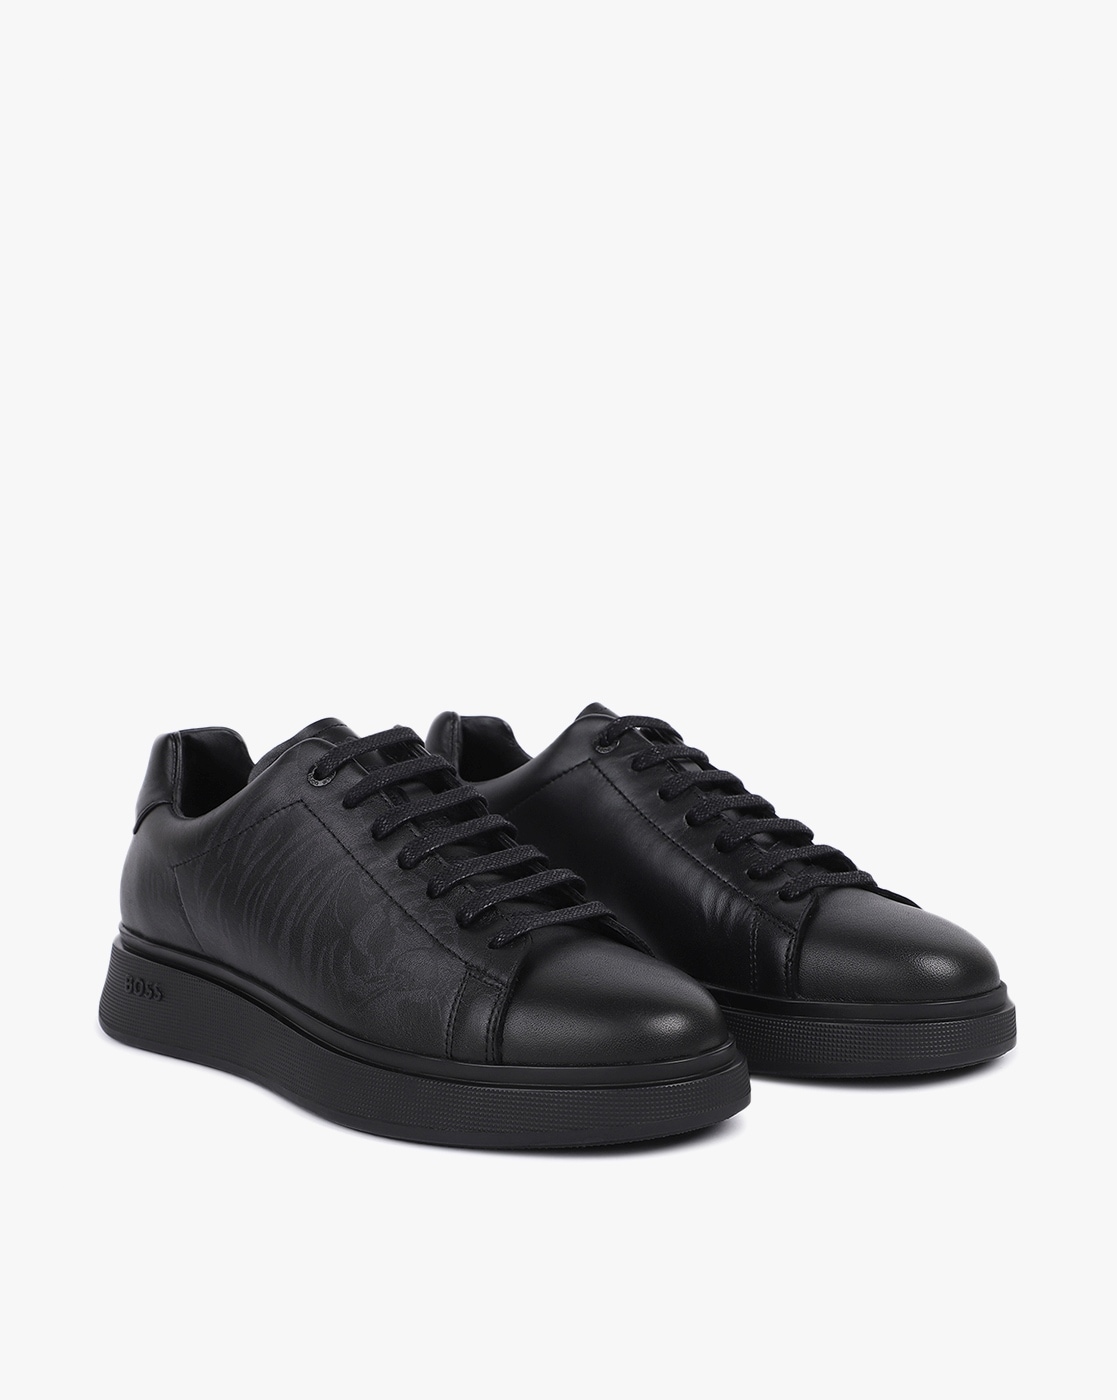 Buy Hugo Boss Men s Aki Leather Sneakers Shoes Black 10 D(M) US at Amazon.in